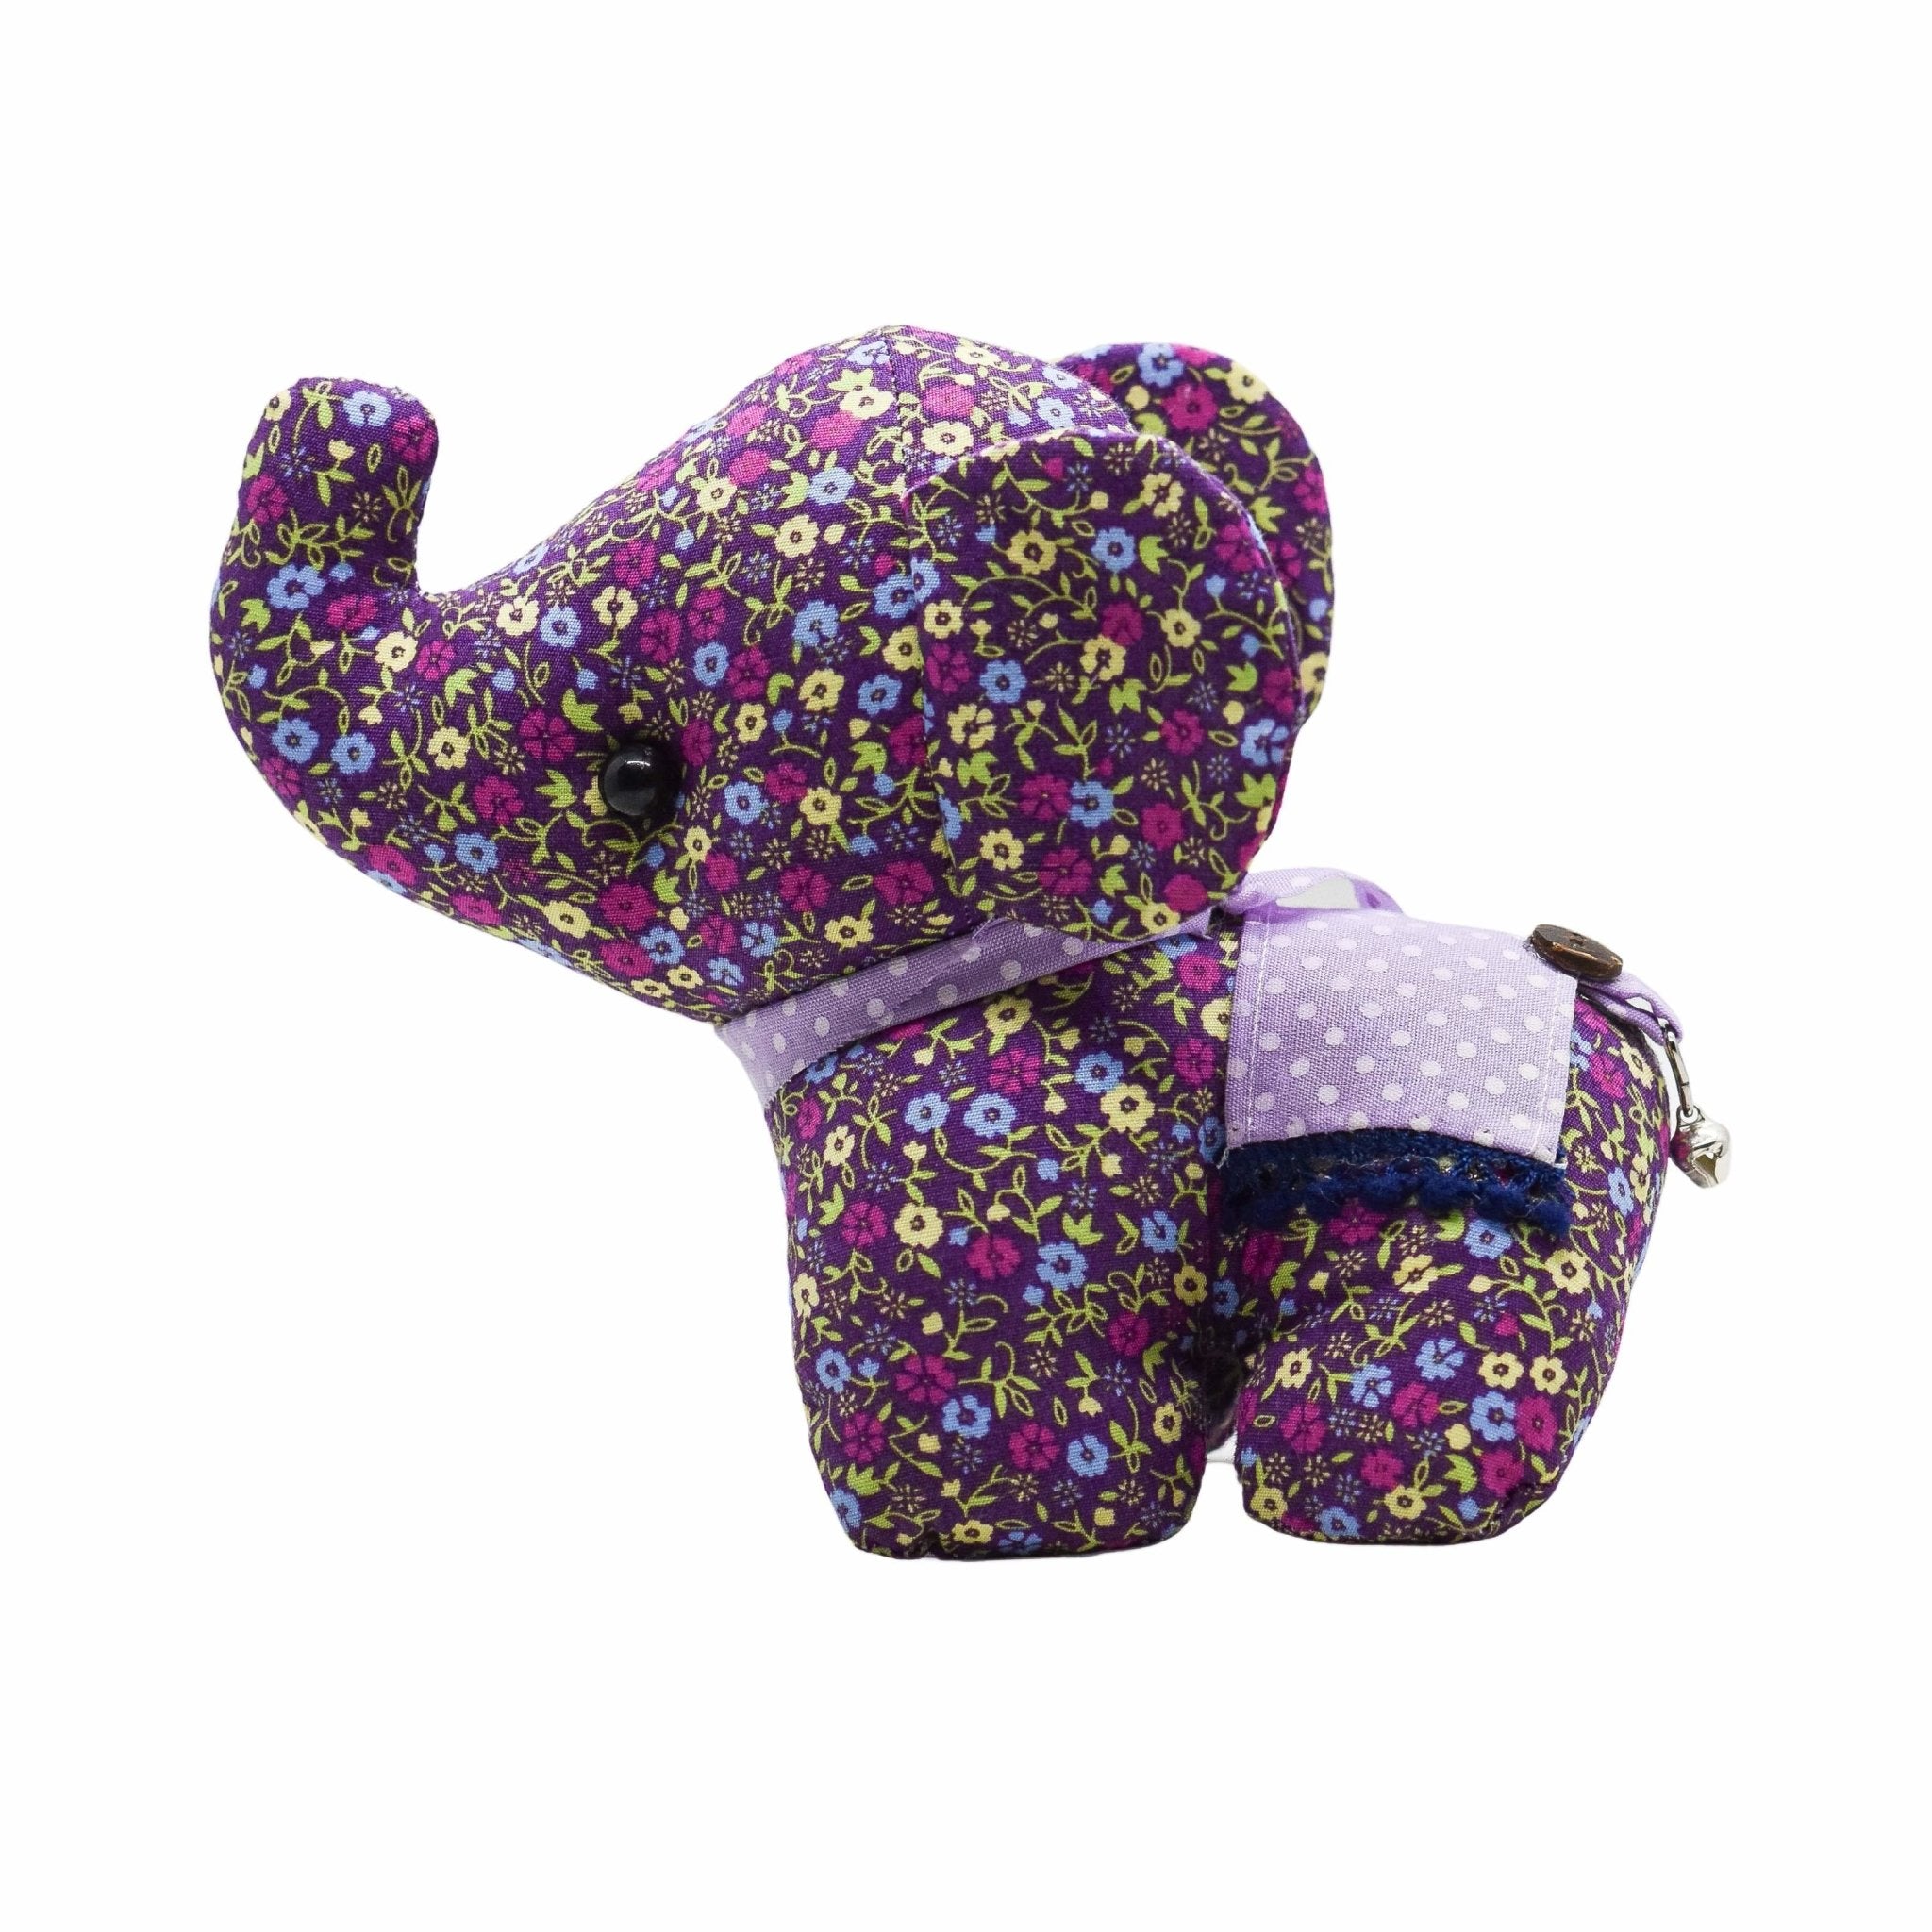 MANDALAY ELEPHANT PLUSH Elepanta Elephant Plush - Buy Today Elephant Pants Jewelry And Bohemian Clothes Handmade In Thailand Help To Save The Elephants FairTrade And Vegan